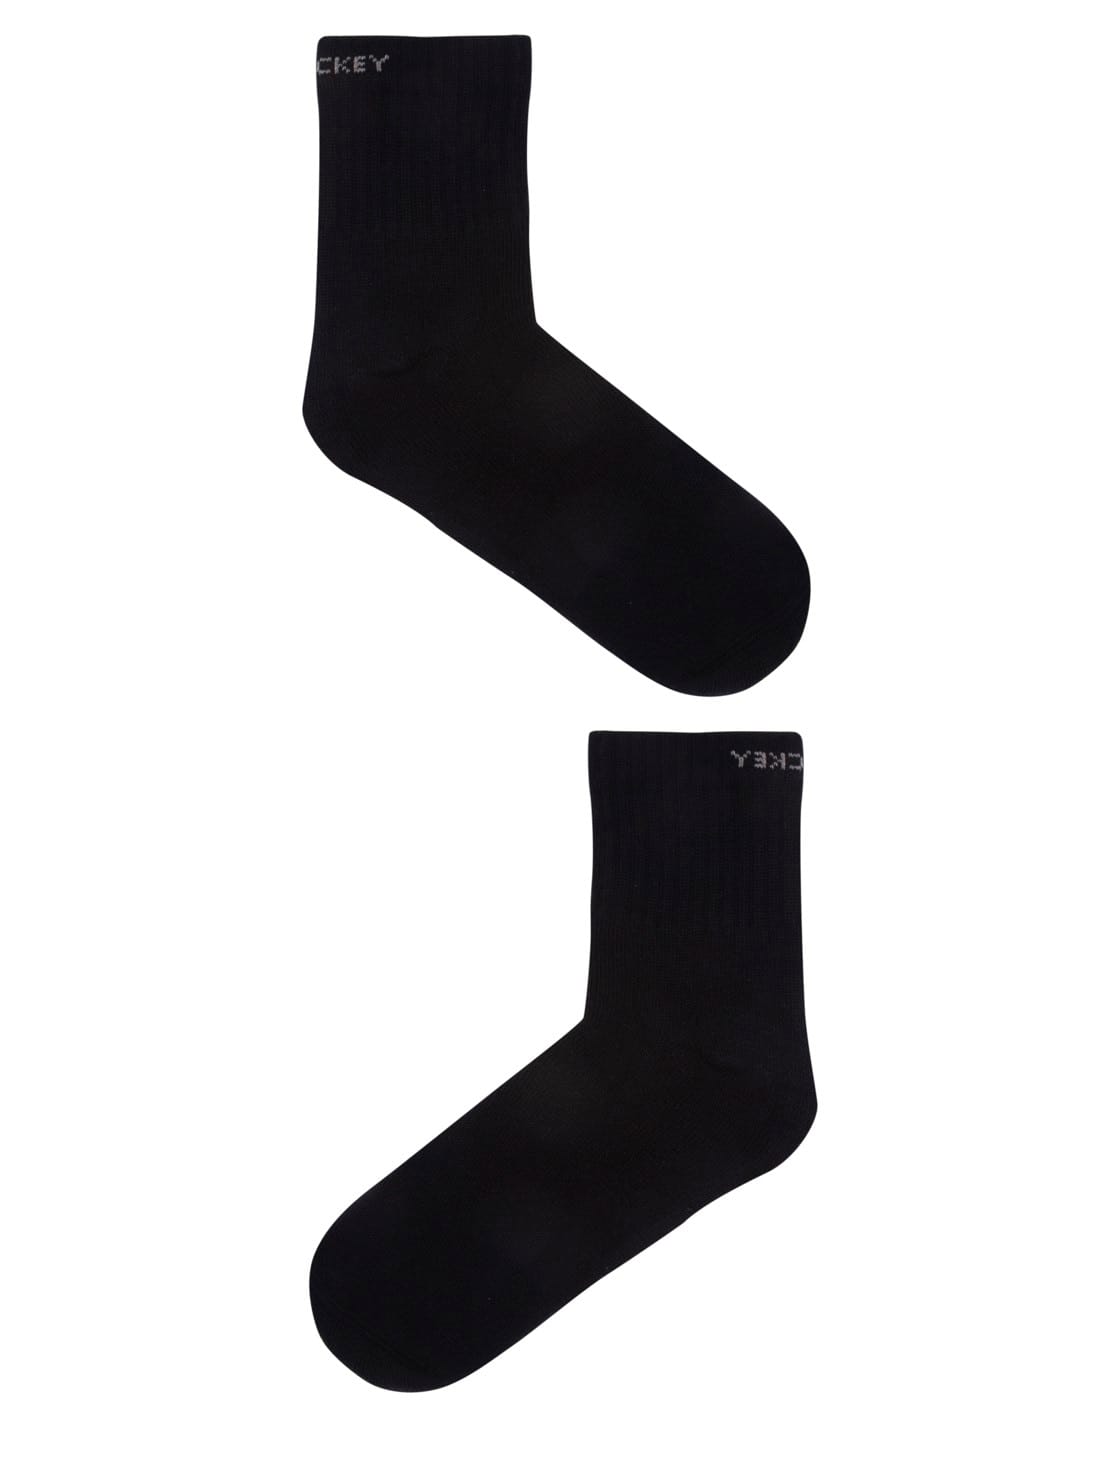 Buy Black Solid Color Training Ankle Socks for Men 7036 | Jockey India